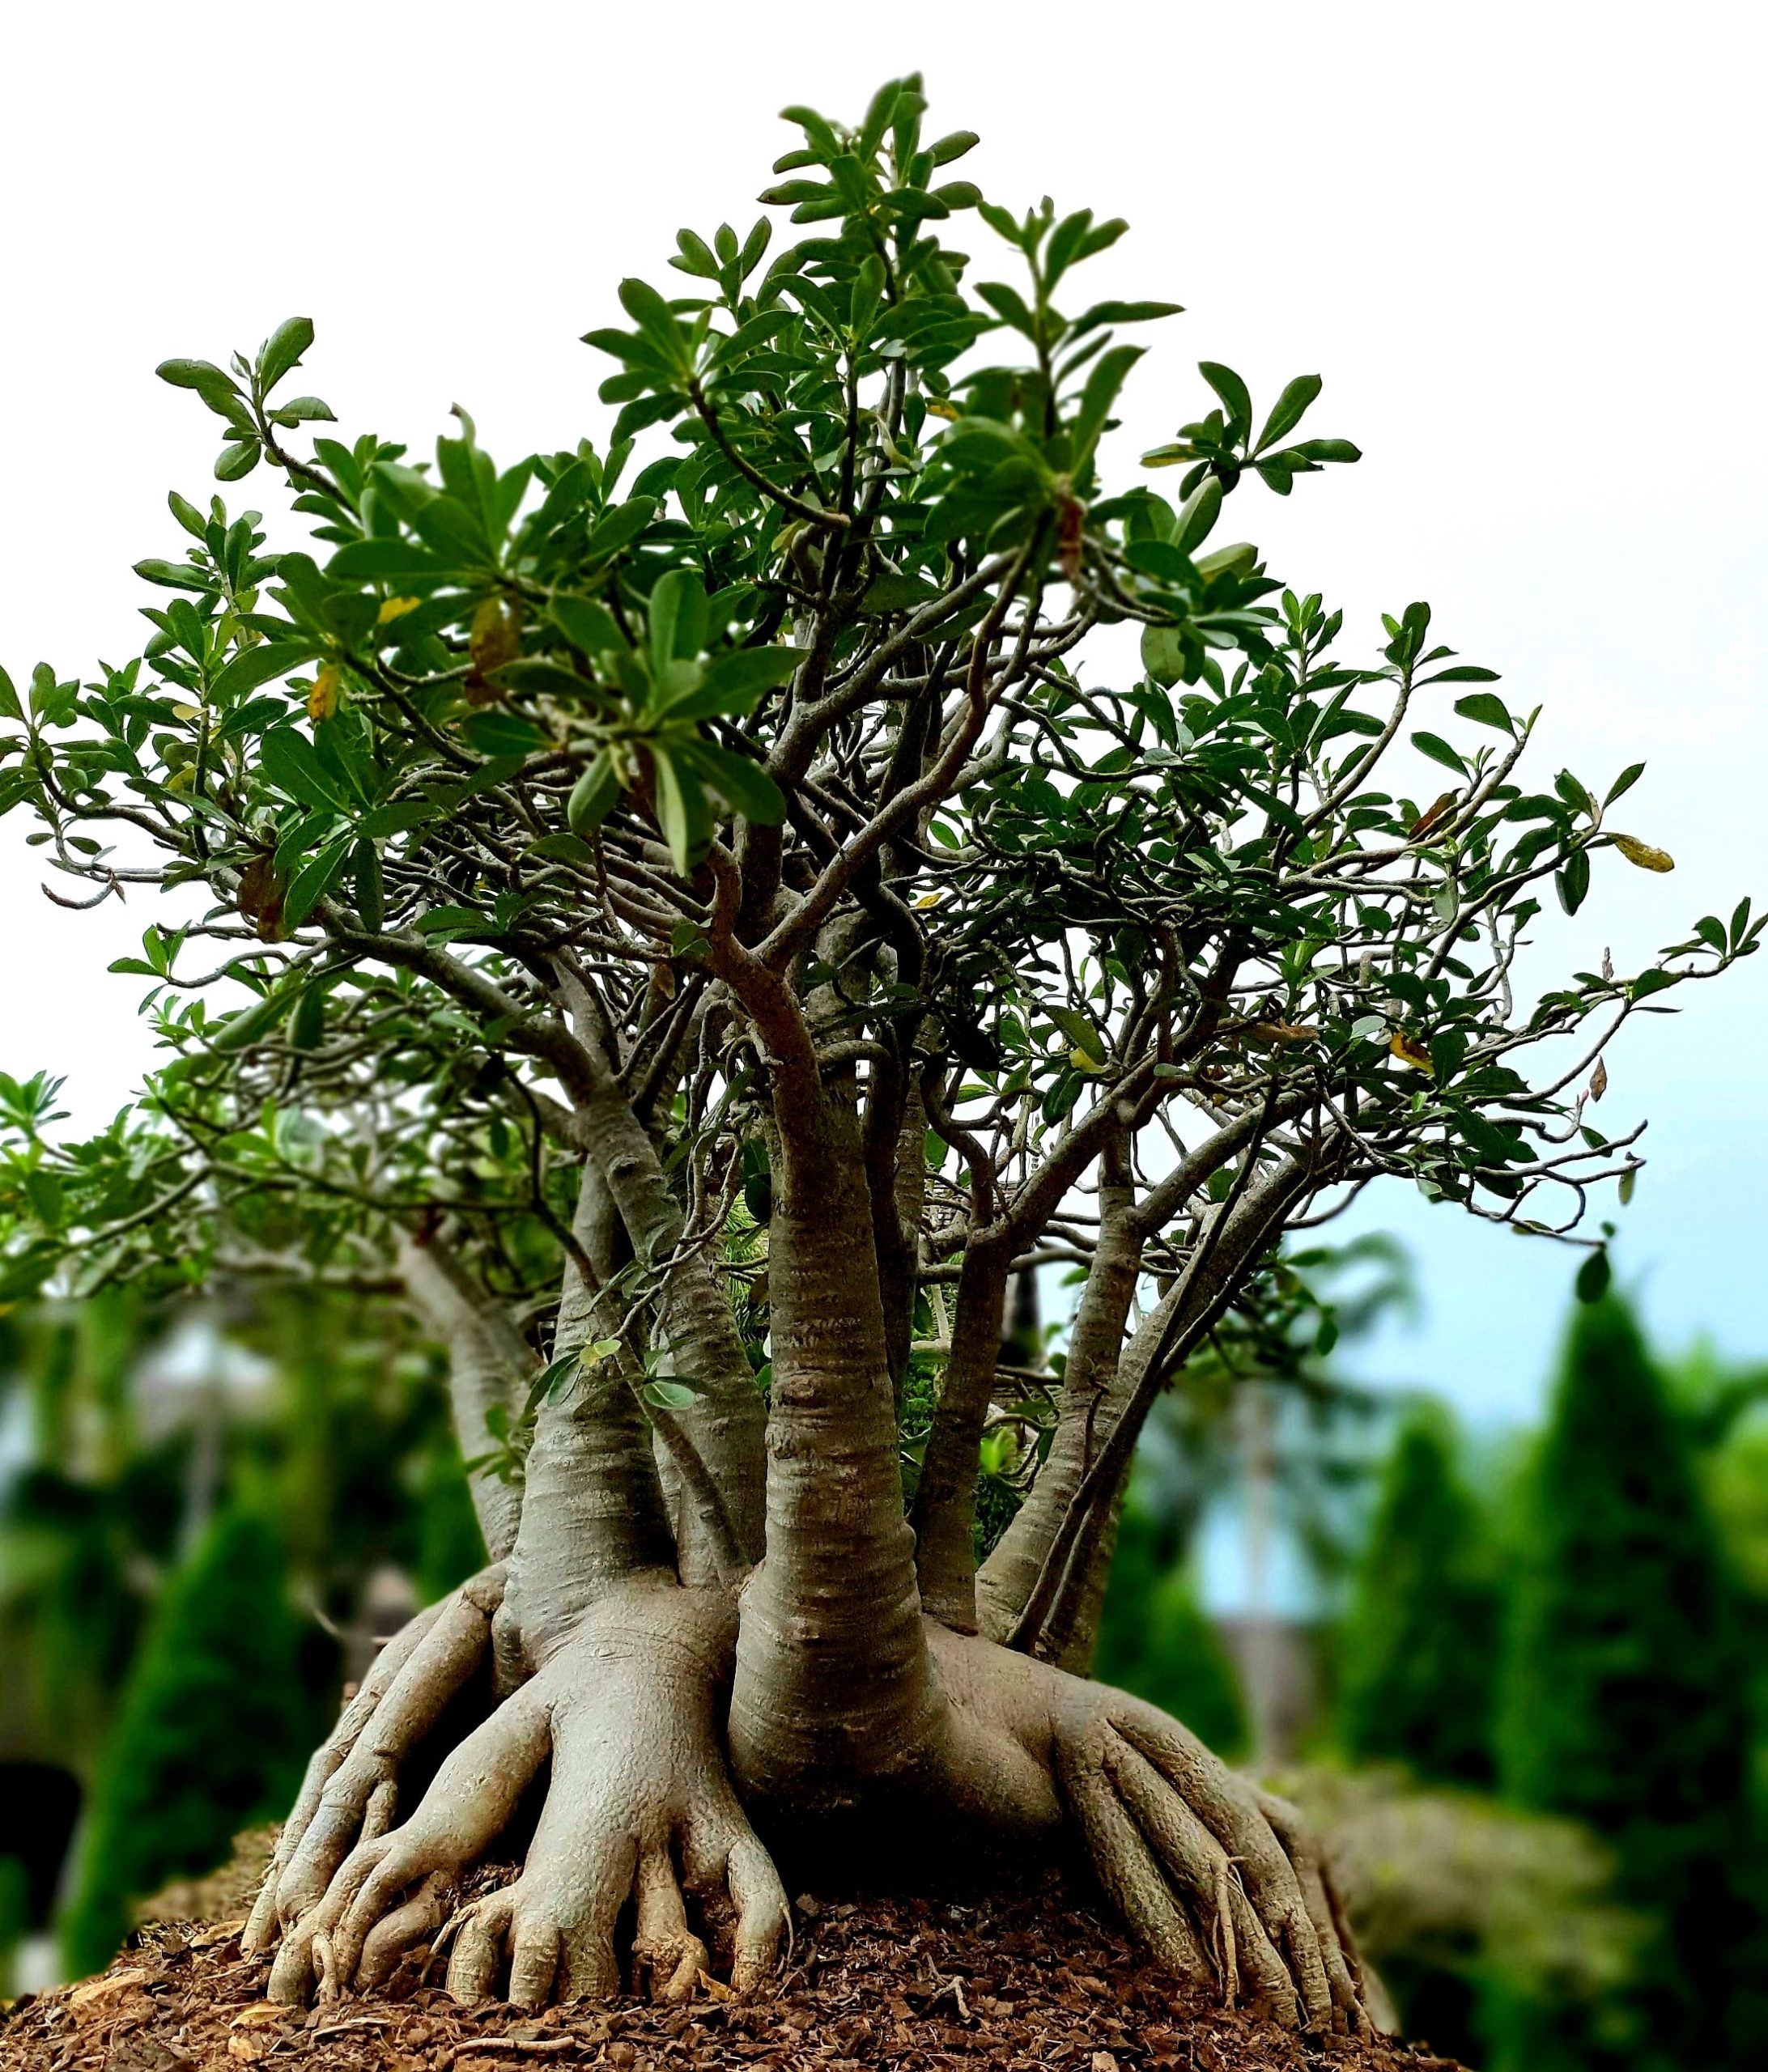 tree of life